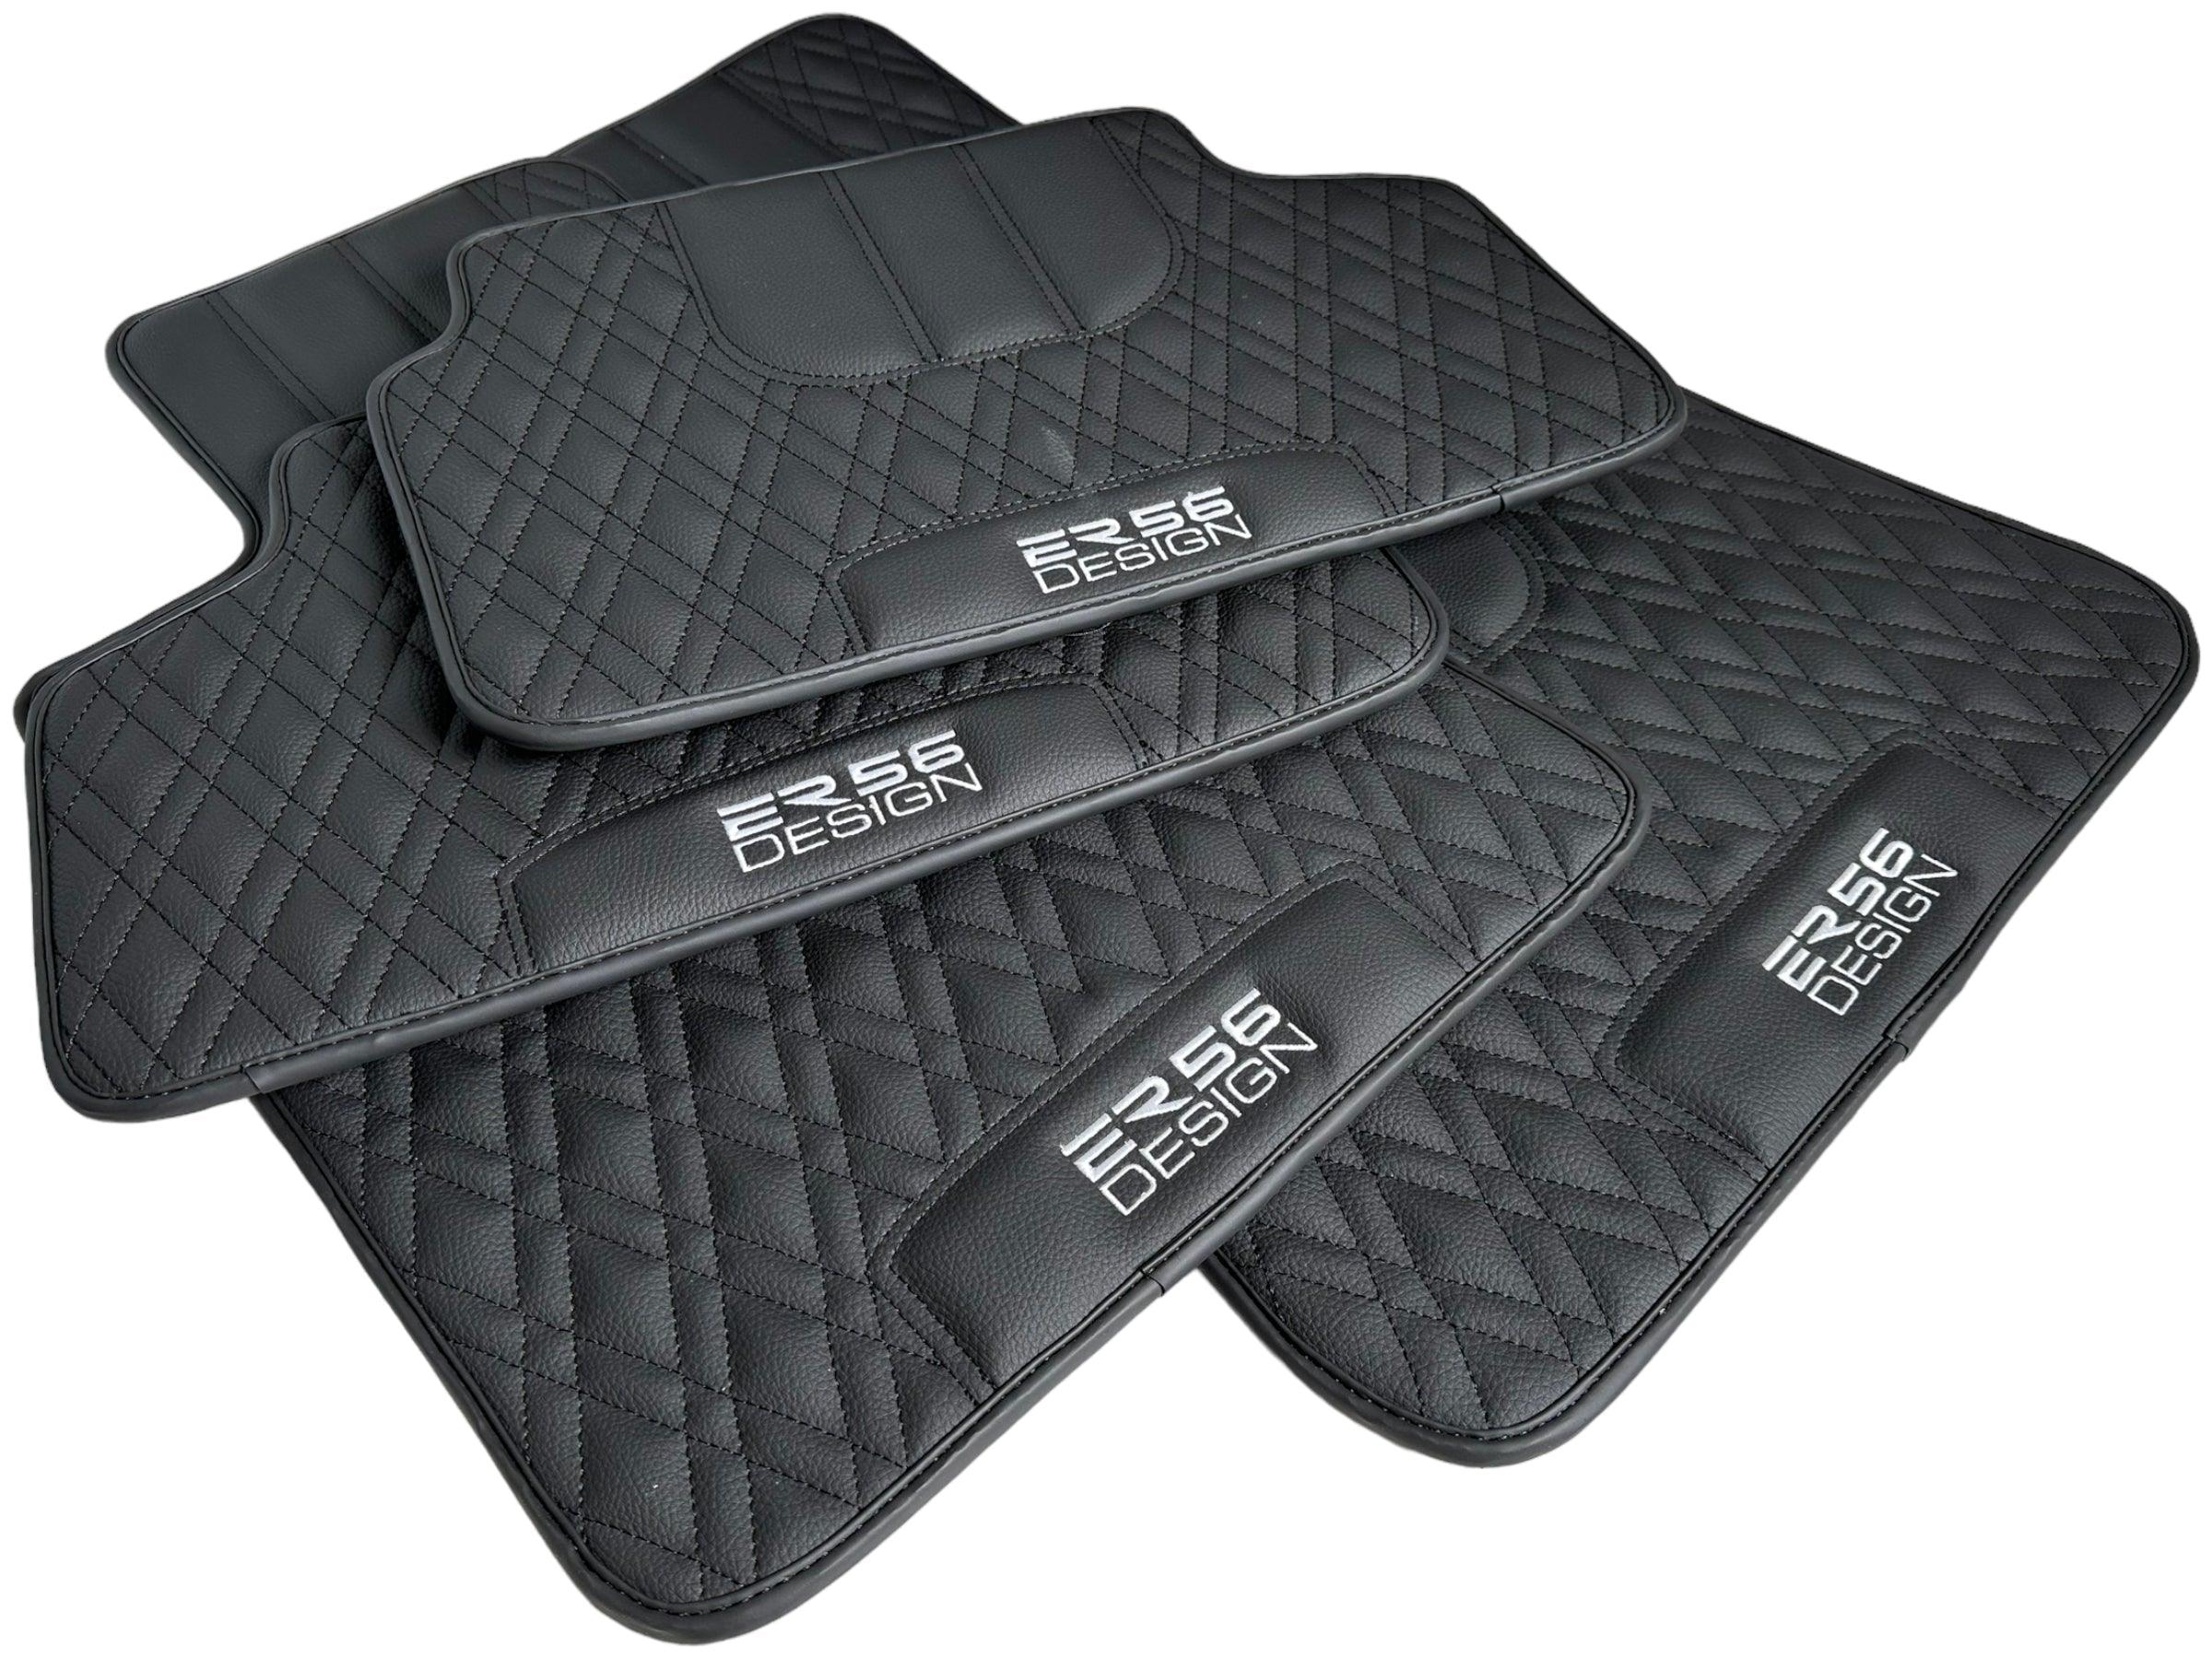 Floor Mats For BMW 3 Series E30 2-doors Coupe Black Leather Er56 Design - AutoWin